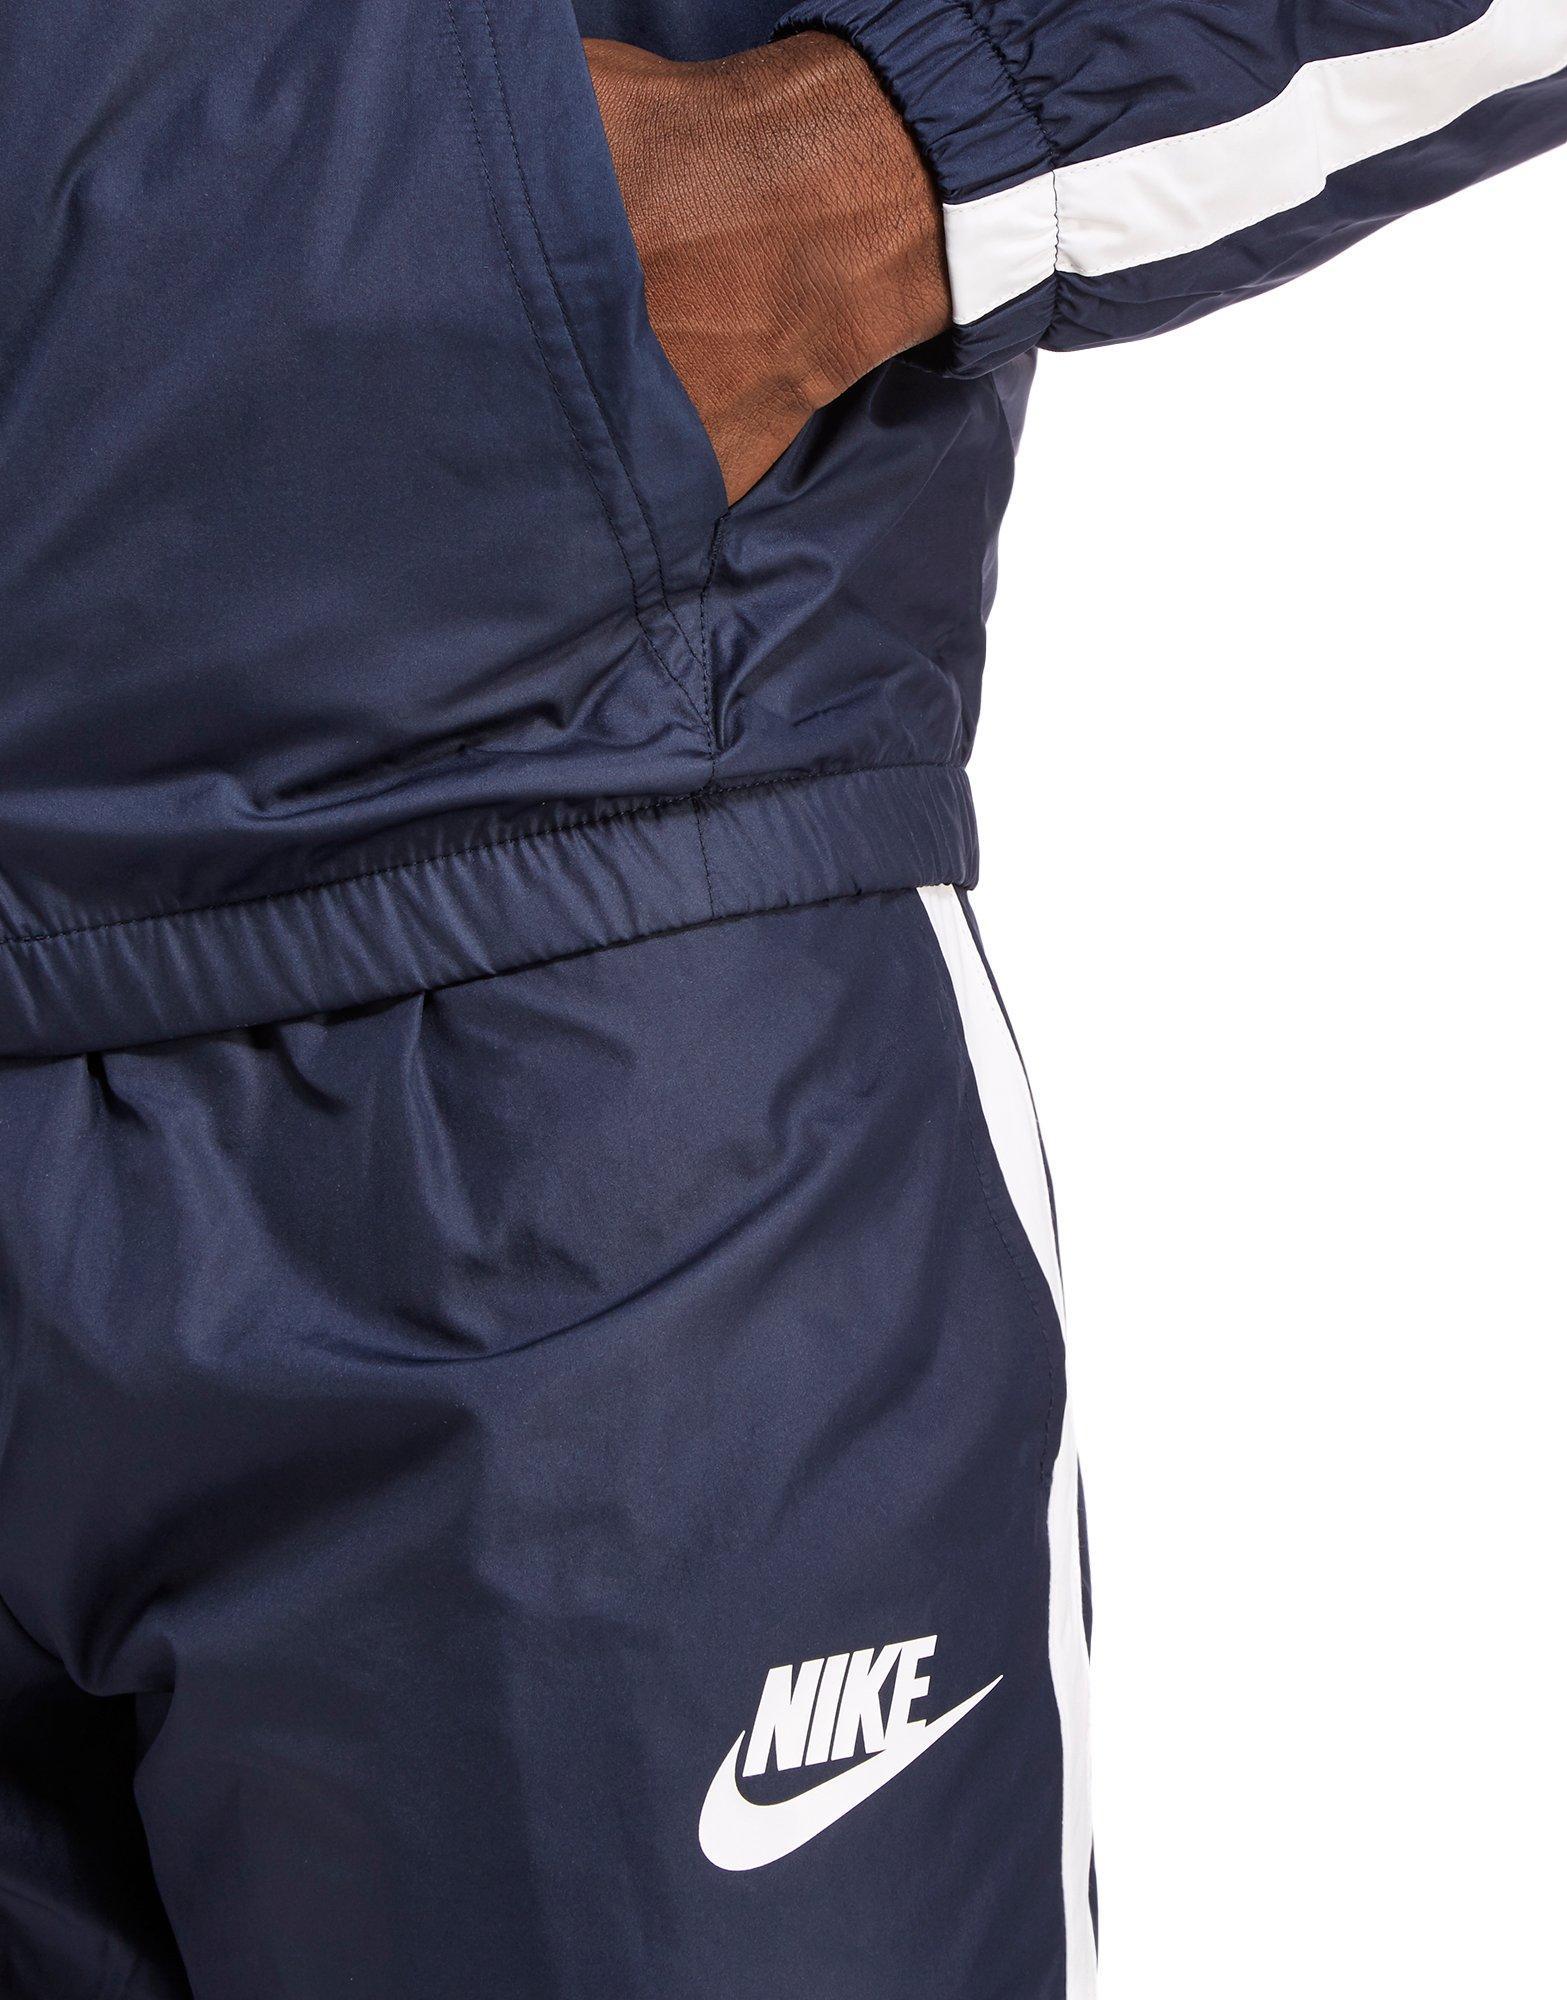 Nike Season Woven Tracksuit in Blue for Men - Lyst